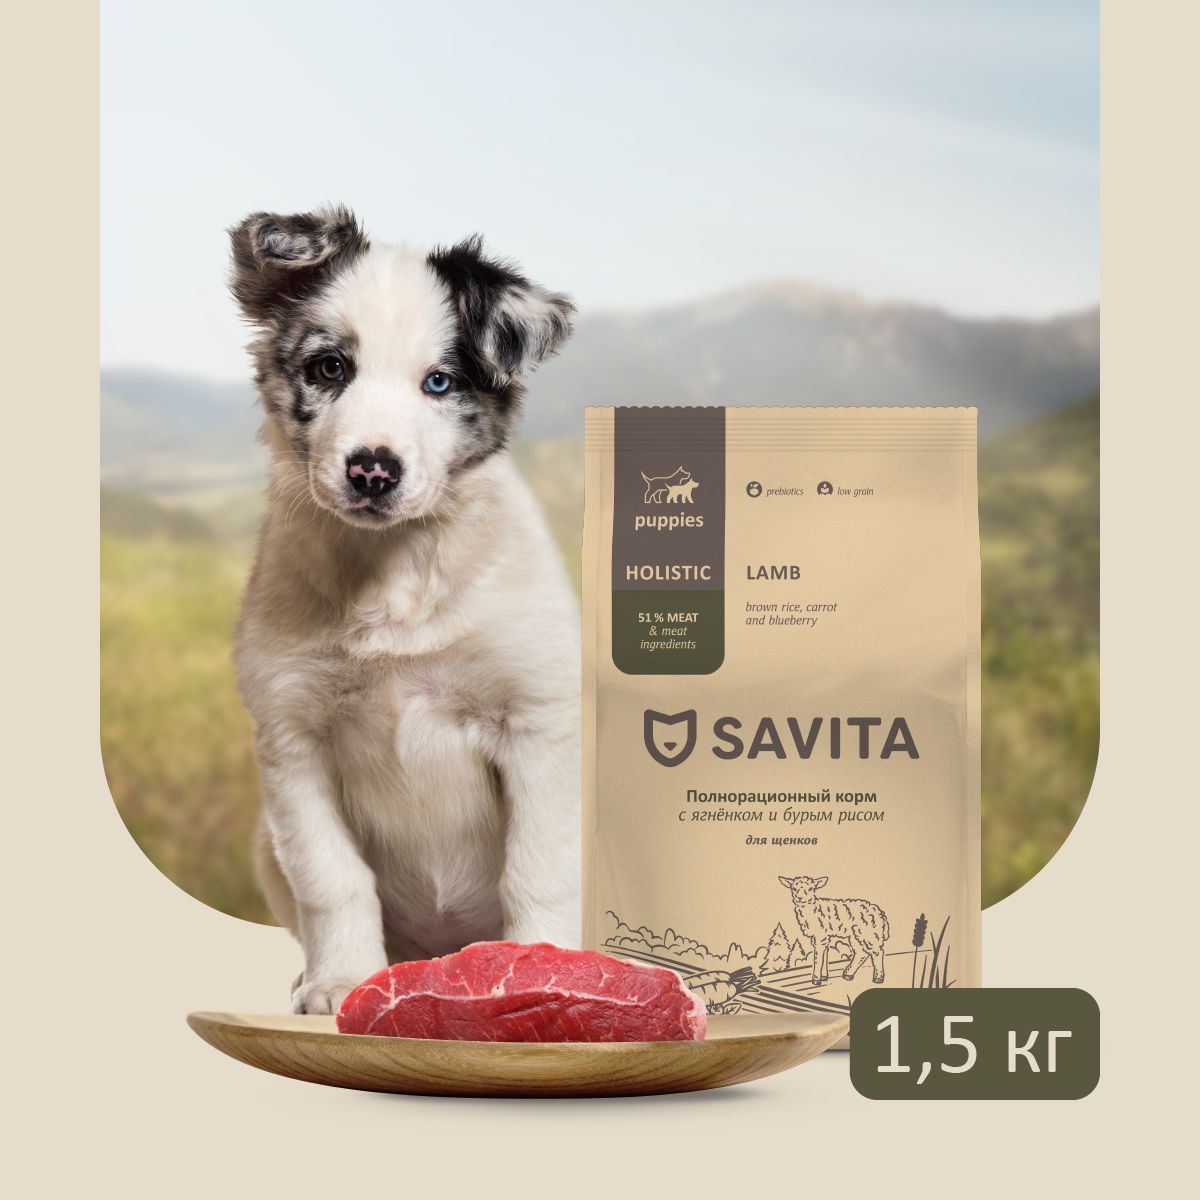 Savita для щенков. Сухой корм Savita для щенков. Корм савита для щенков ПЕТОБЗОР. Savita для щенков со злаками. Корм савита для собак отзывы